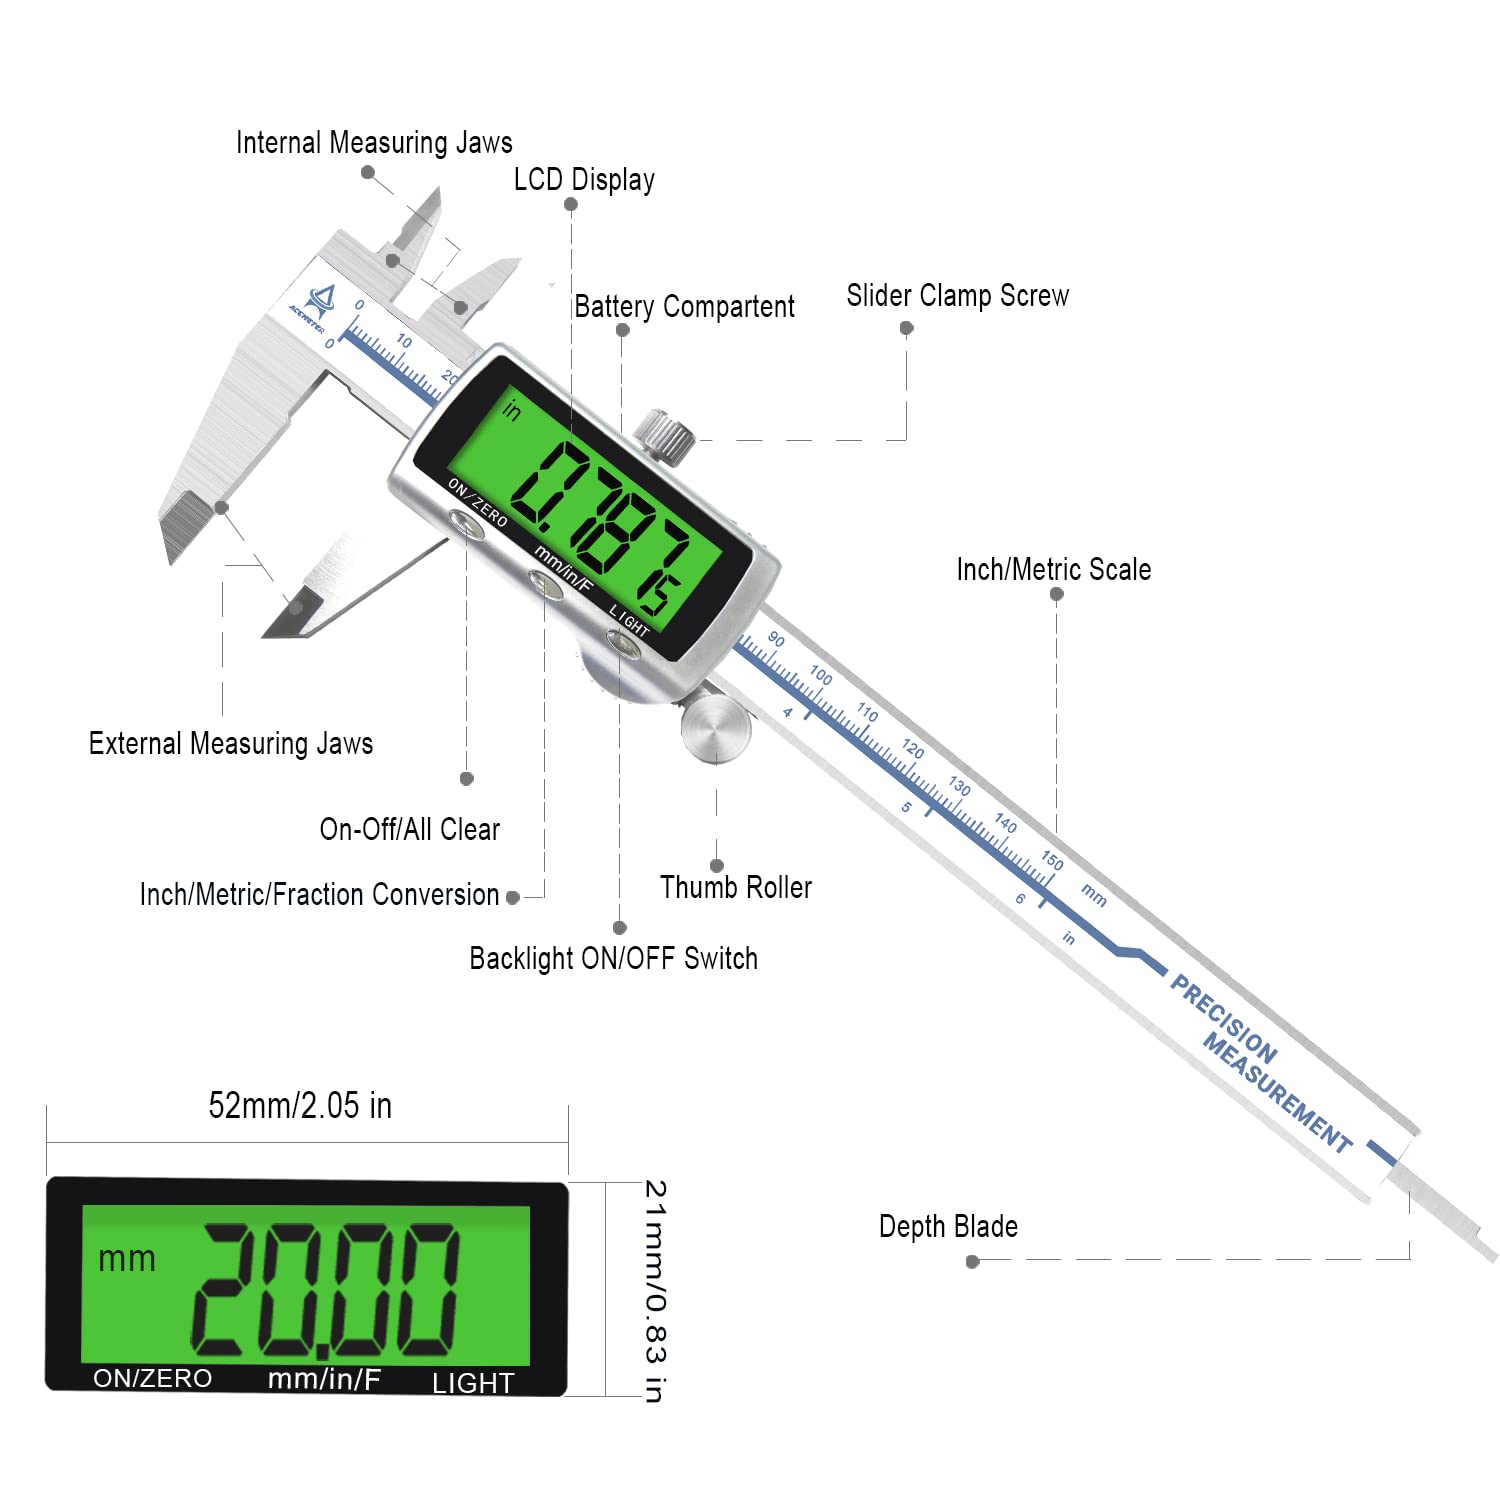 Digital Caliper Electronic Measuring Tool,Digital Vernier Caliper Inch/Millimeter/Fraction Measurement Caliper for Jewelry-Metal Metric Measure Caliper for Engineer,LCD Screen Featured Backlight